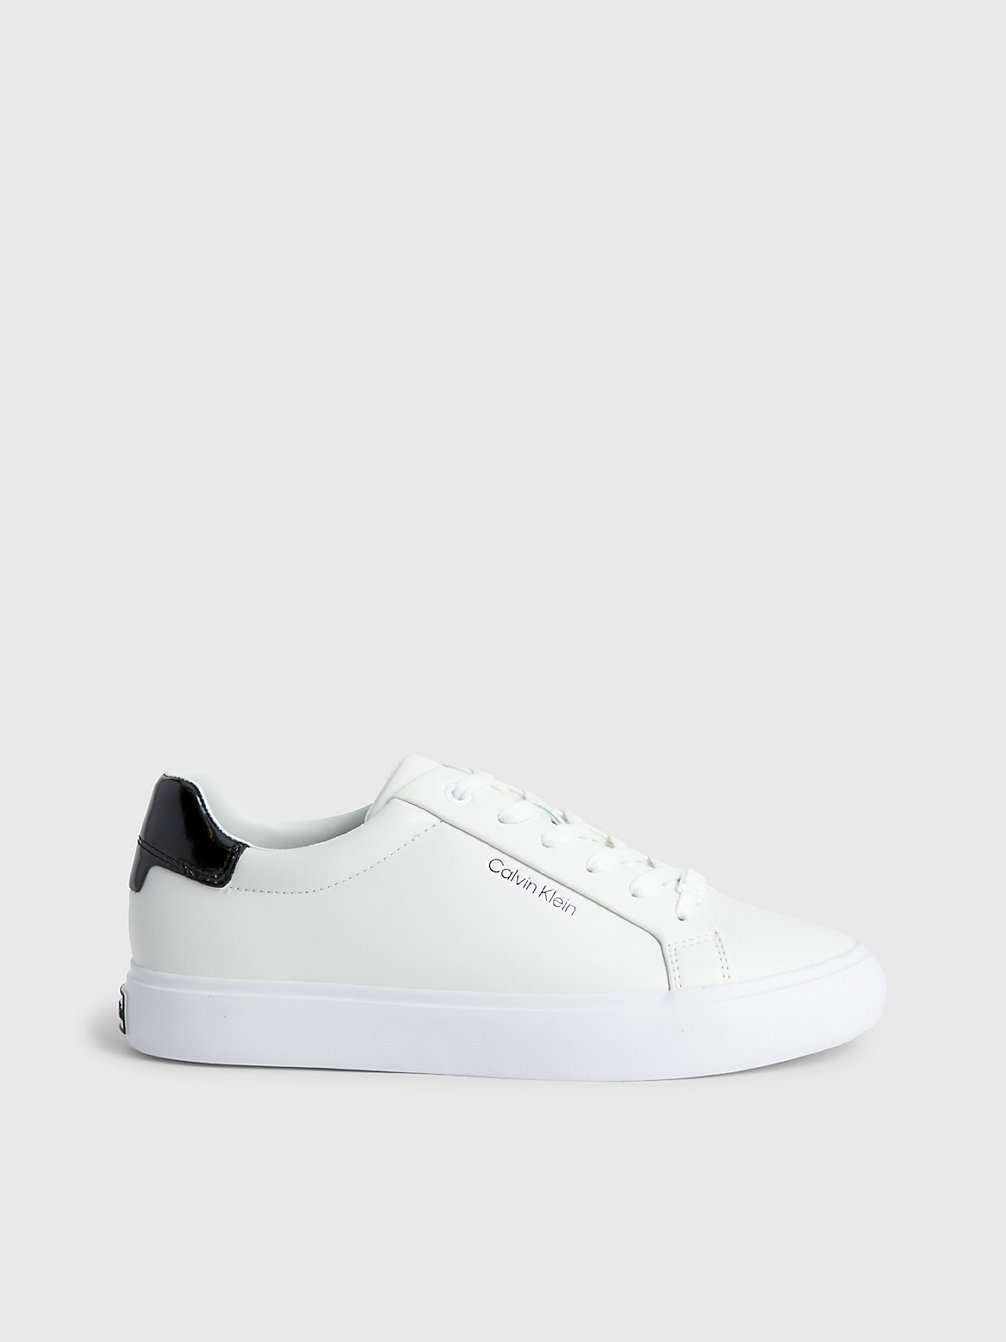 WHITE / BLACK > Leren Sneakers > undefined dames - Calvin Klein